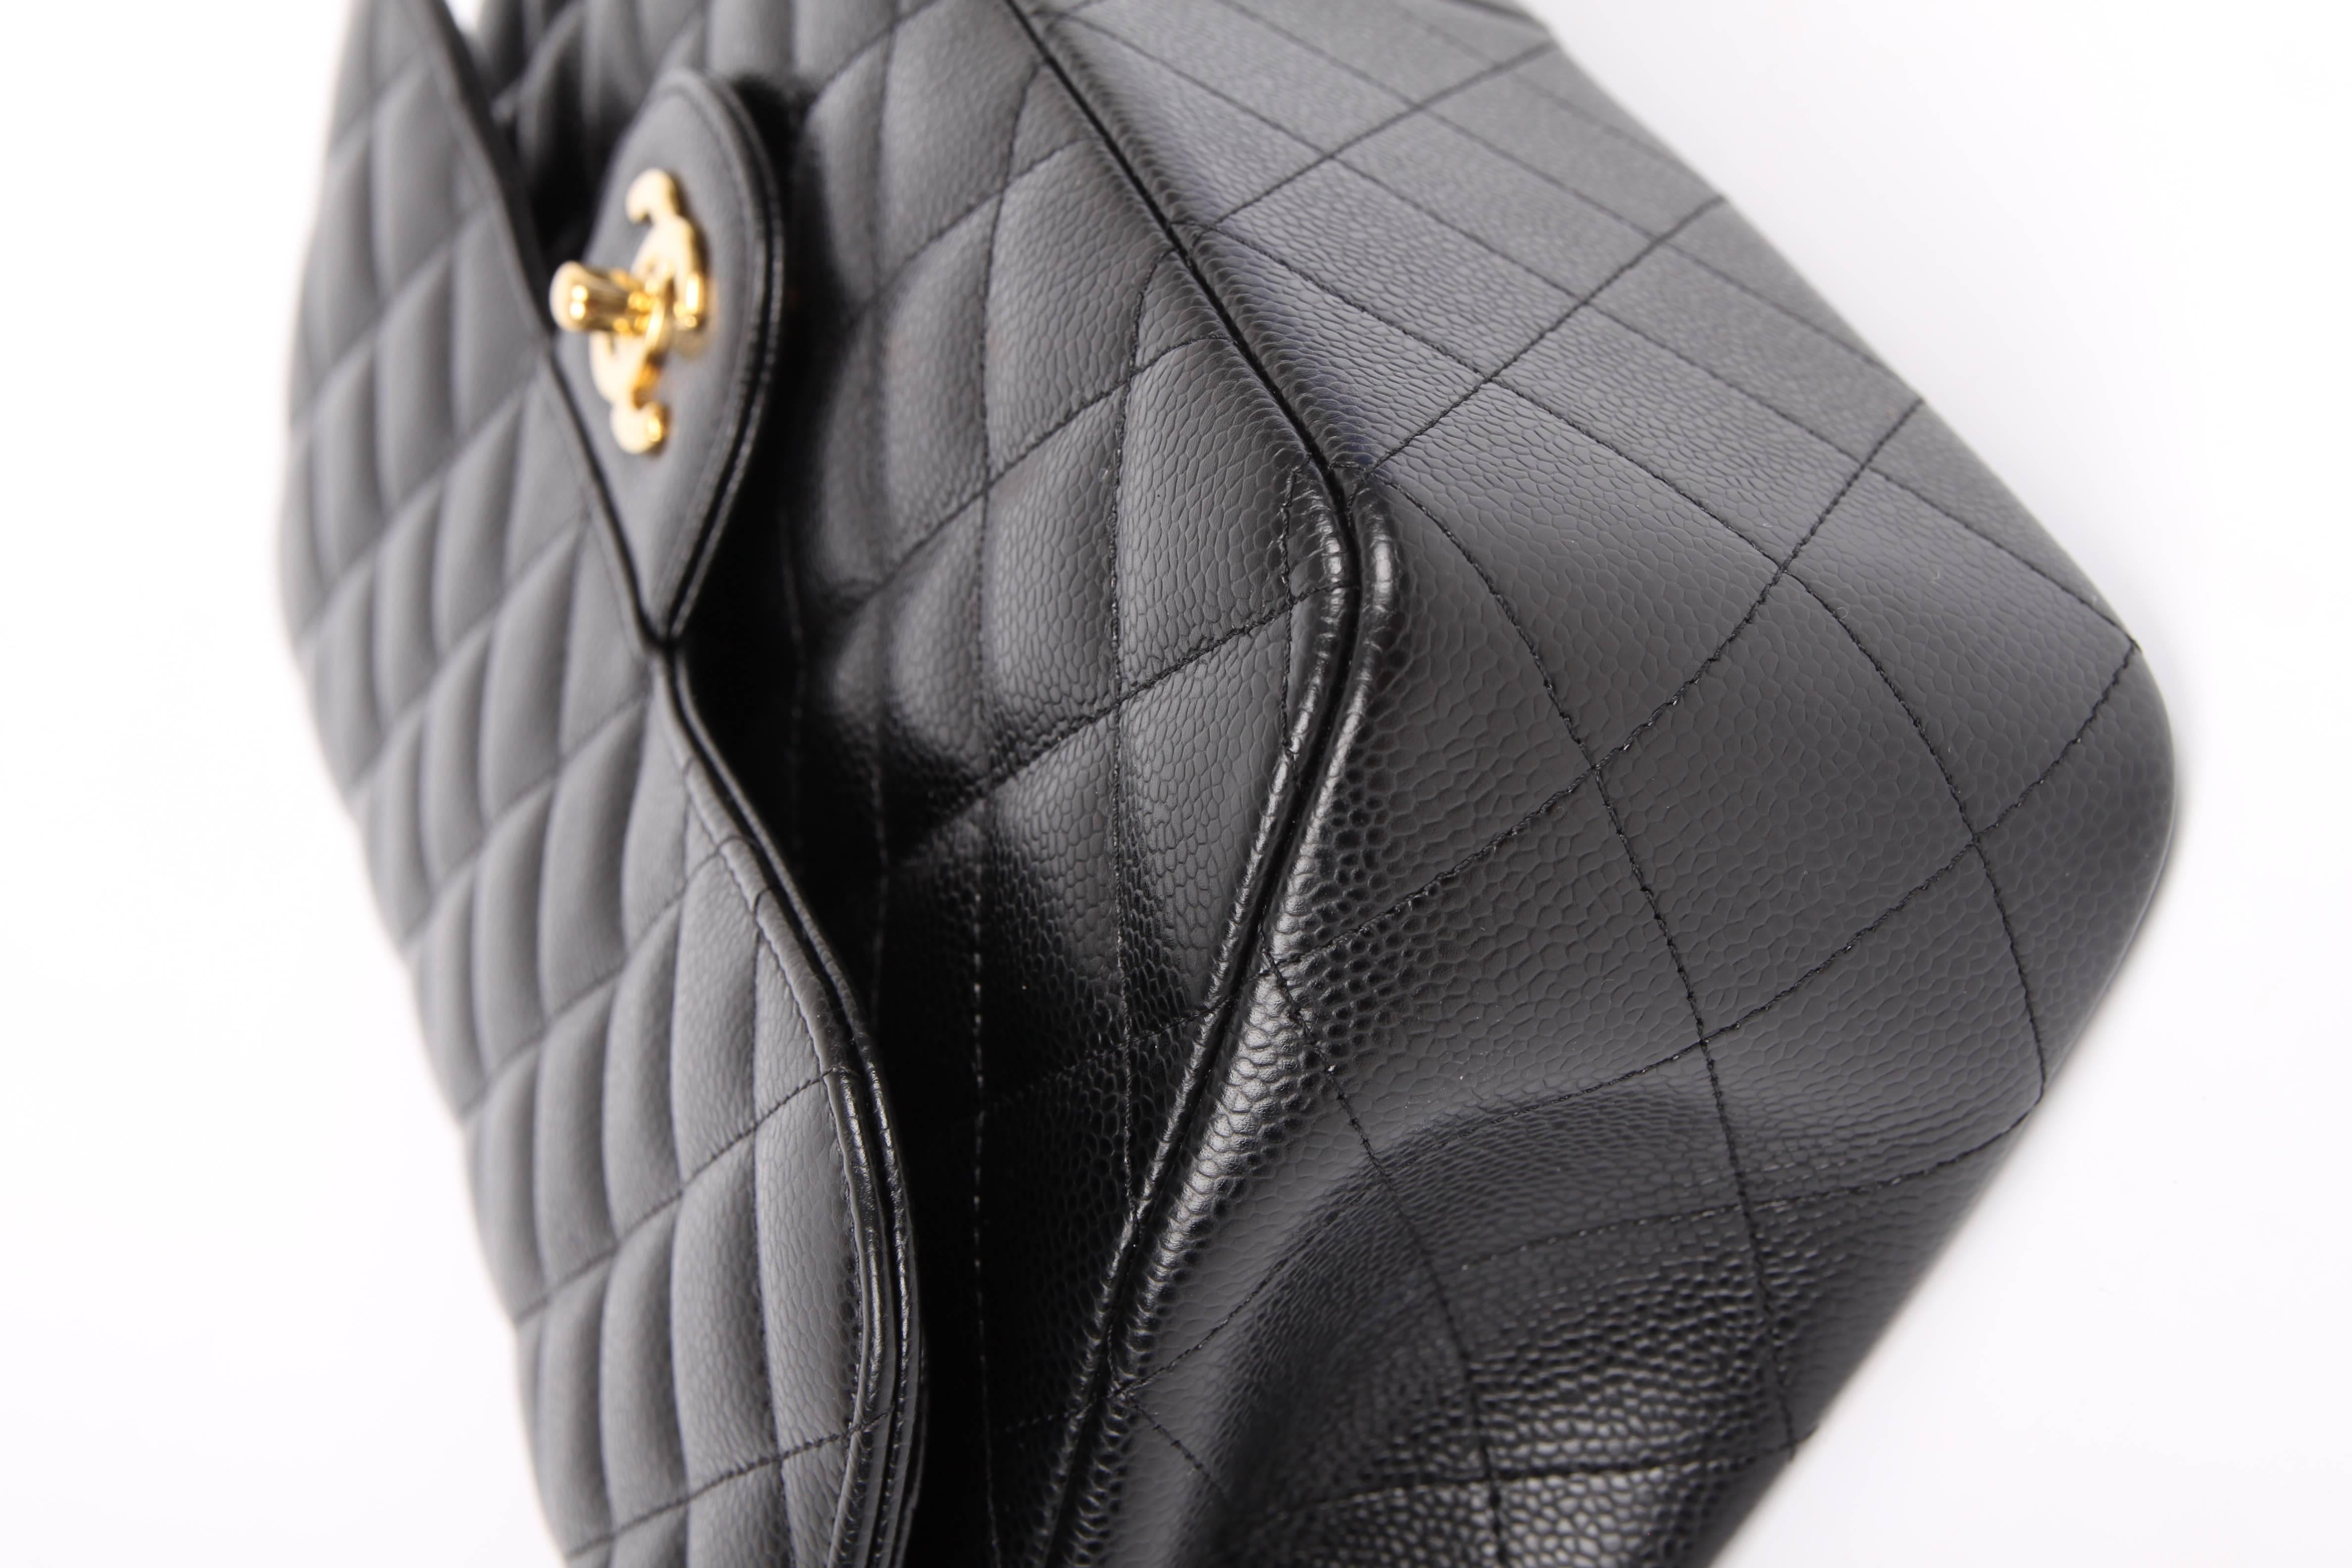       Chanel 2.55 Timeless Jumbo Double Flap Bag - black caviar leather/gold Cha 1